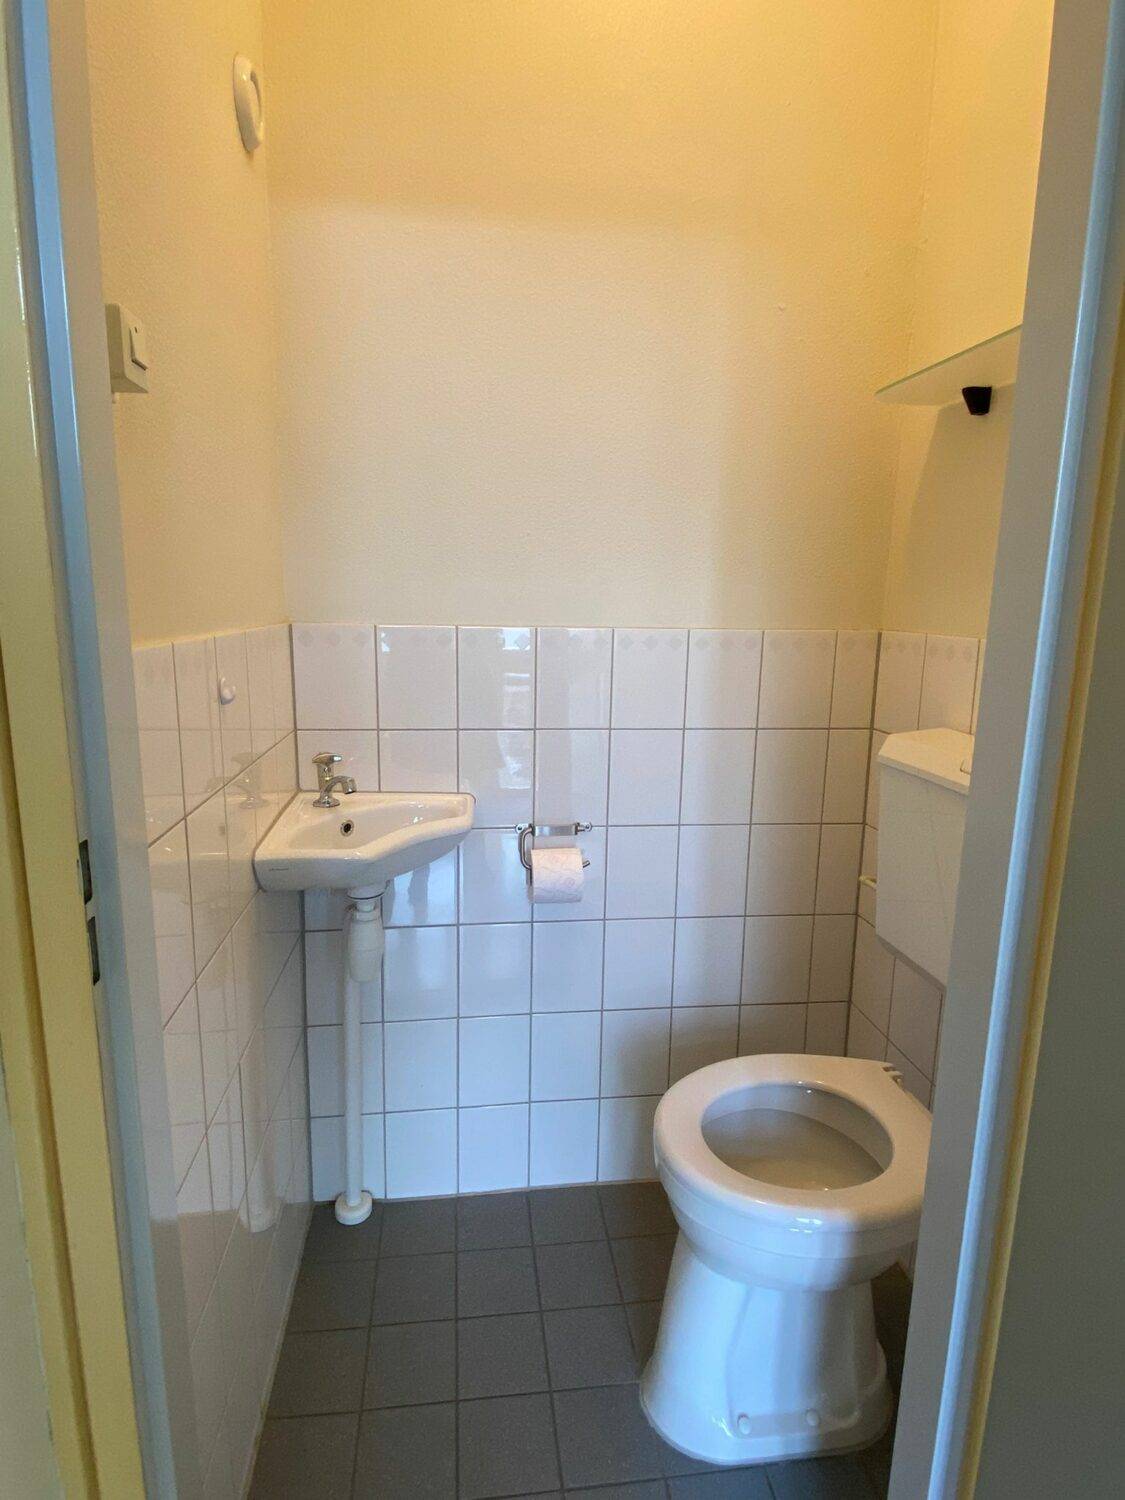 09 toilet